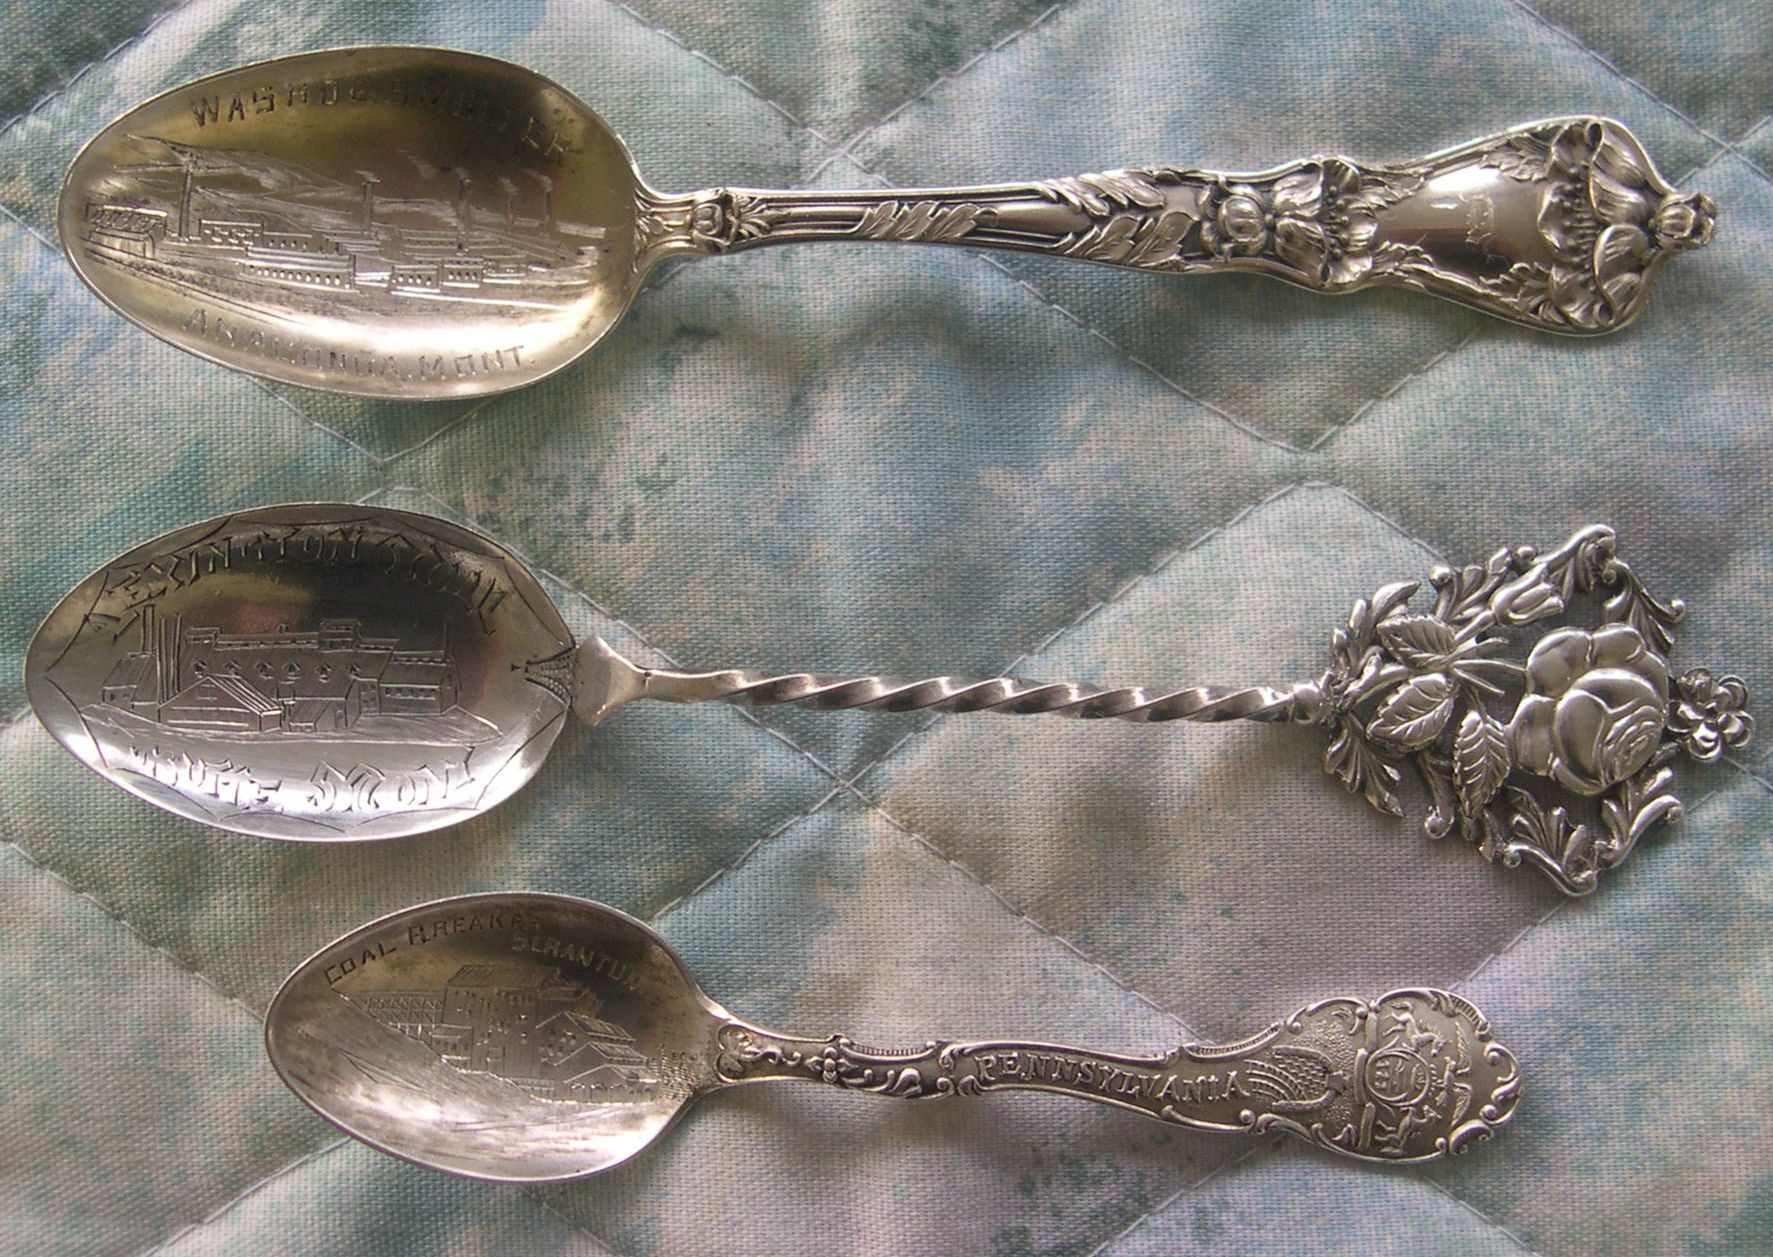 mining spoons